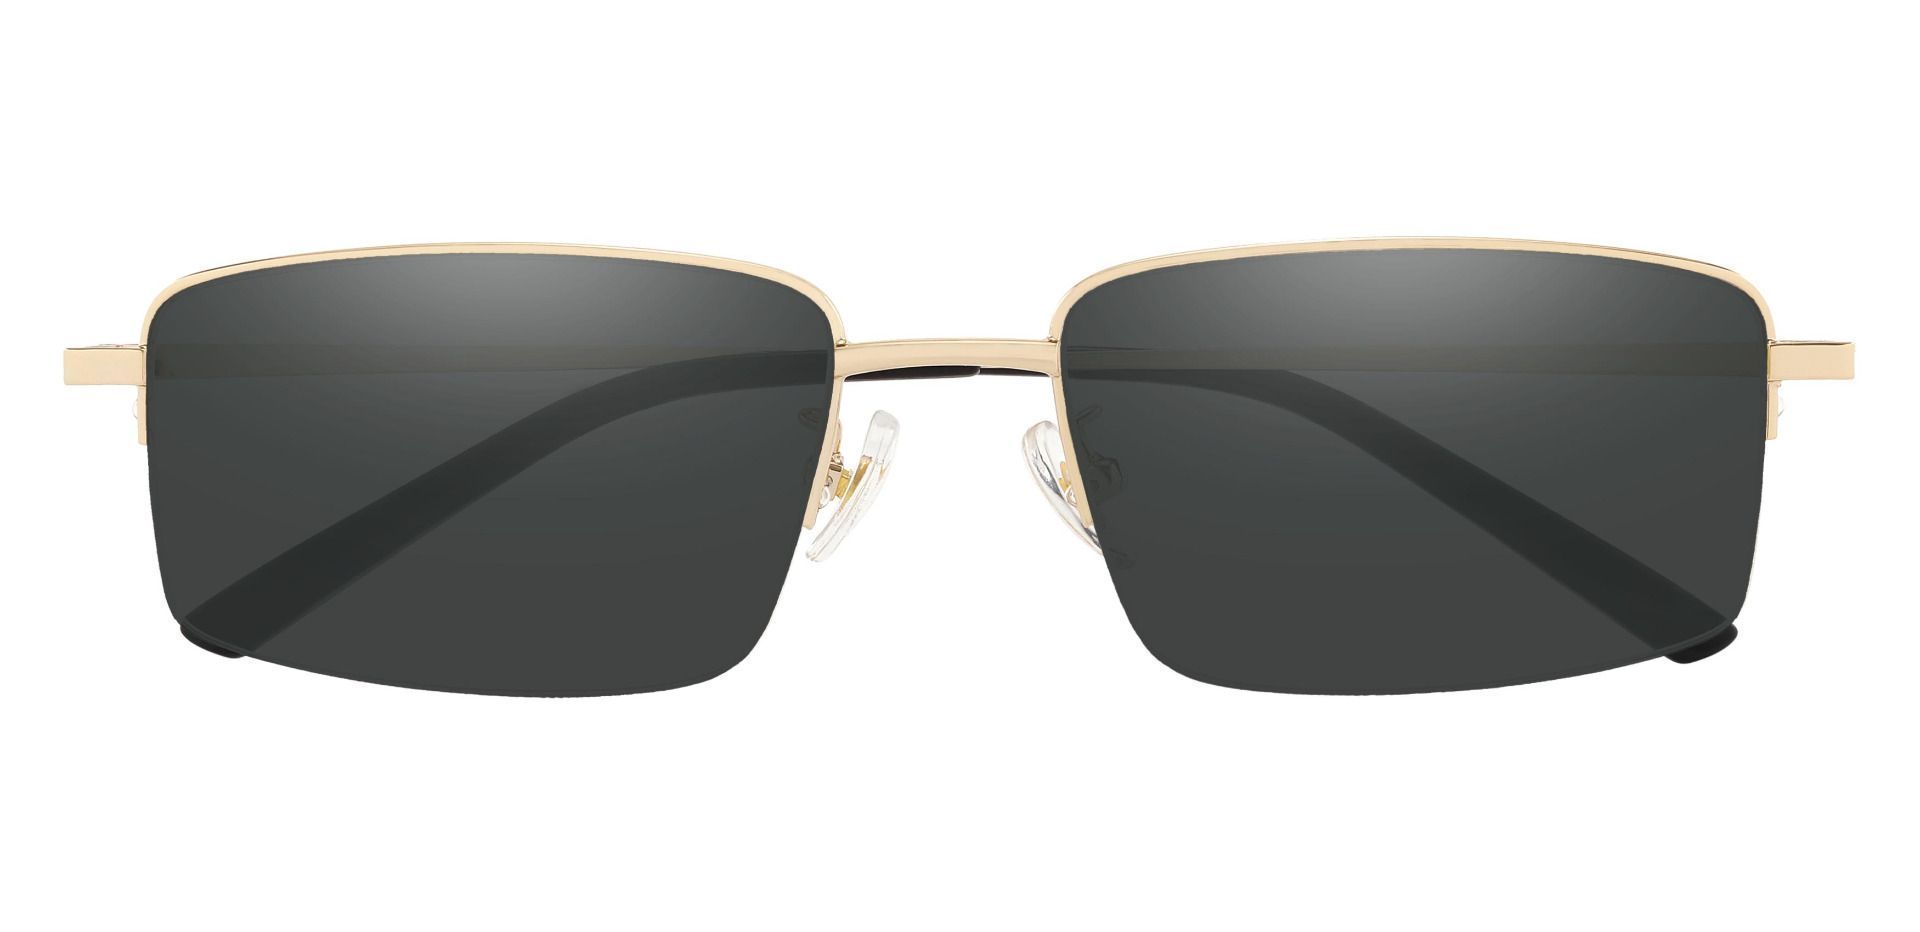 Wayne Rectangle Progressive Sunglasses - Gold Frame With Gray Lenses